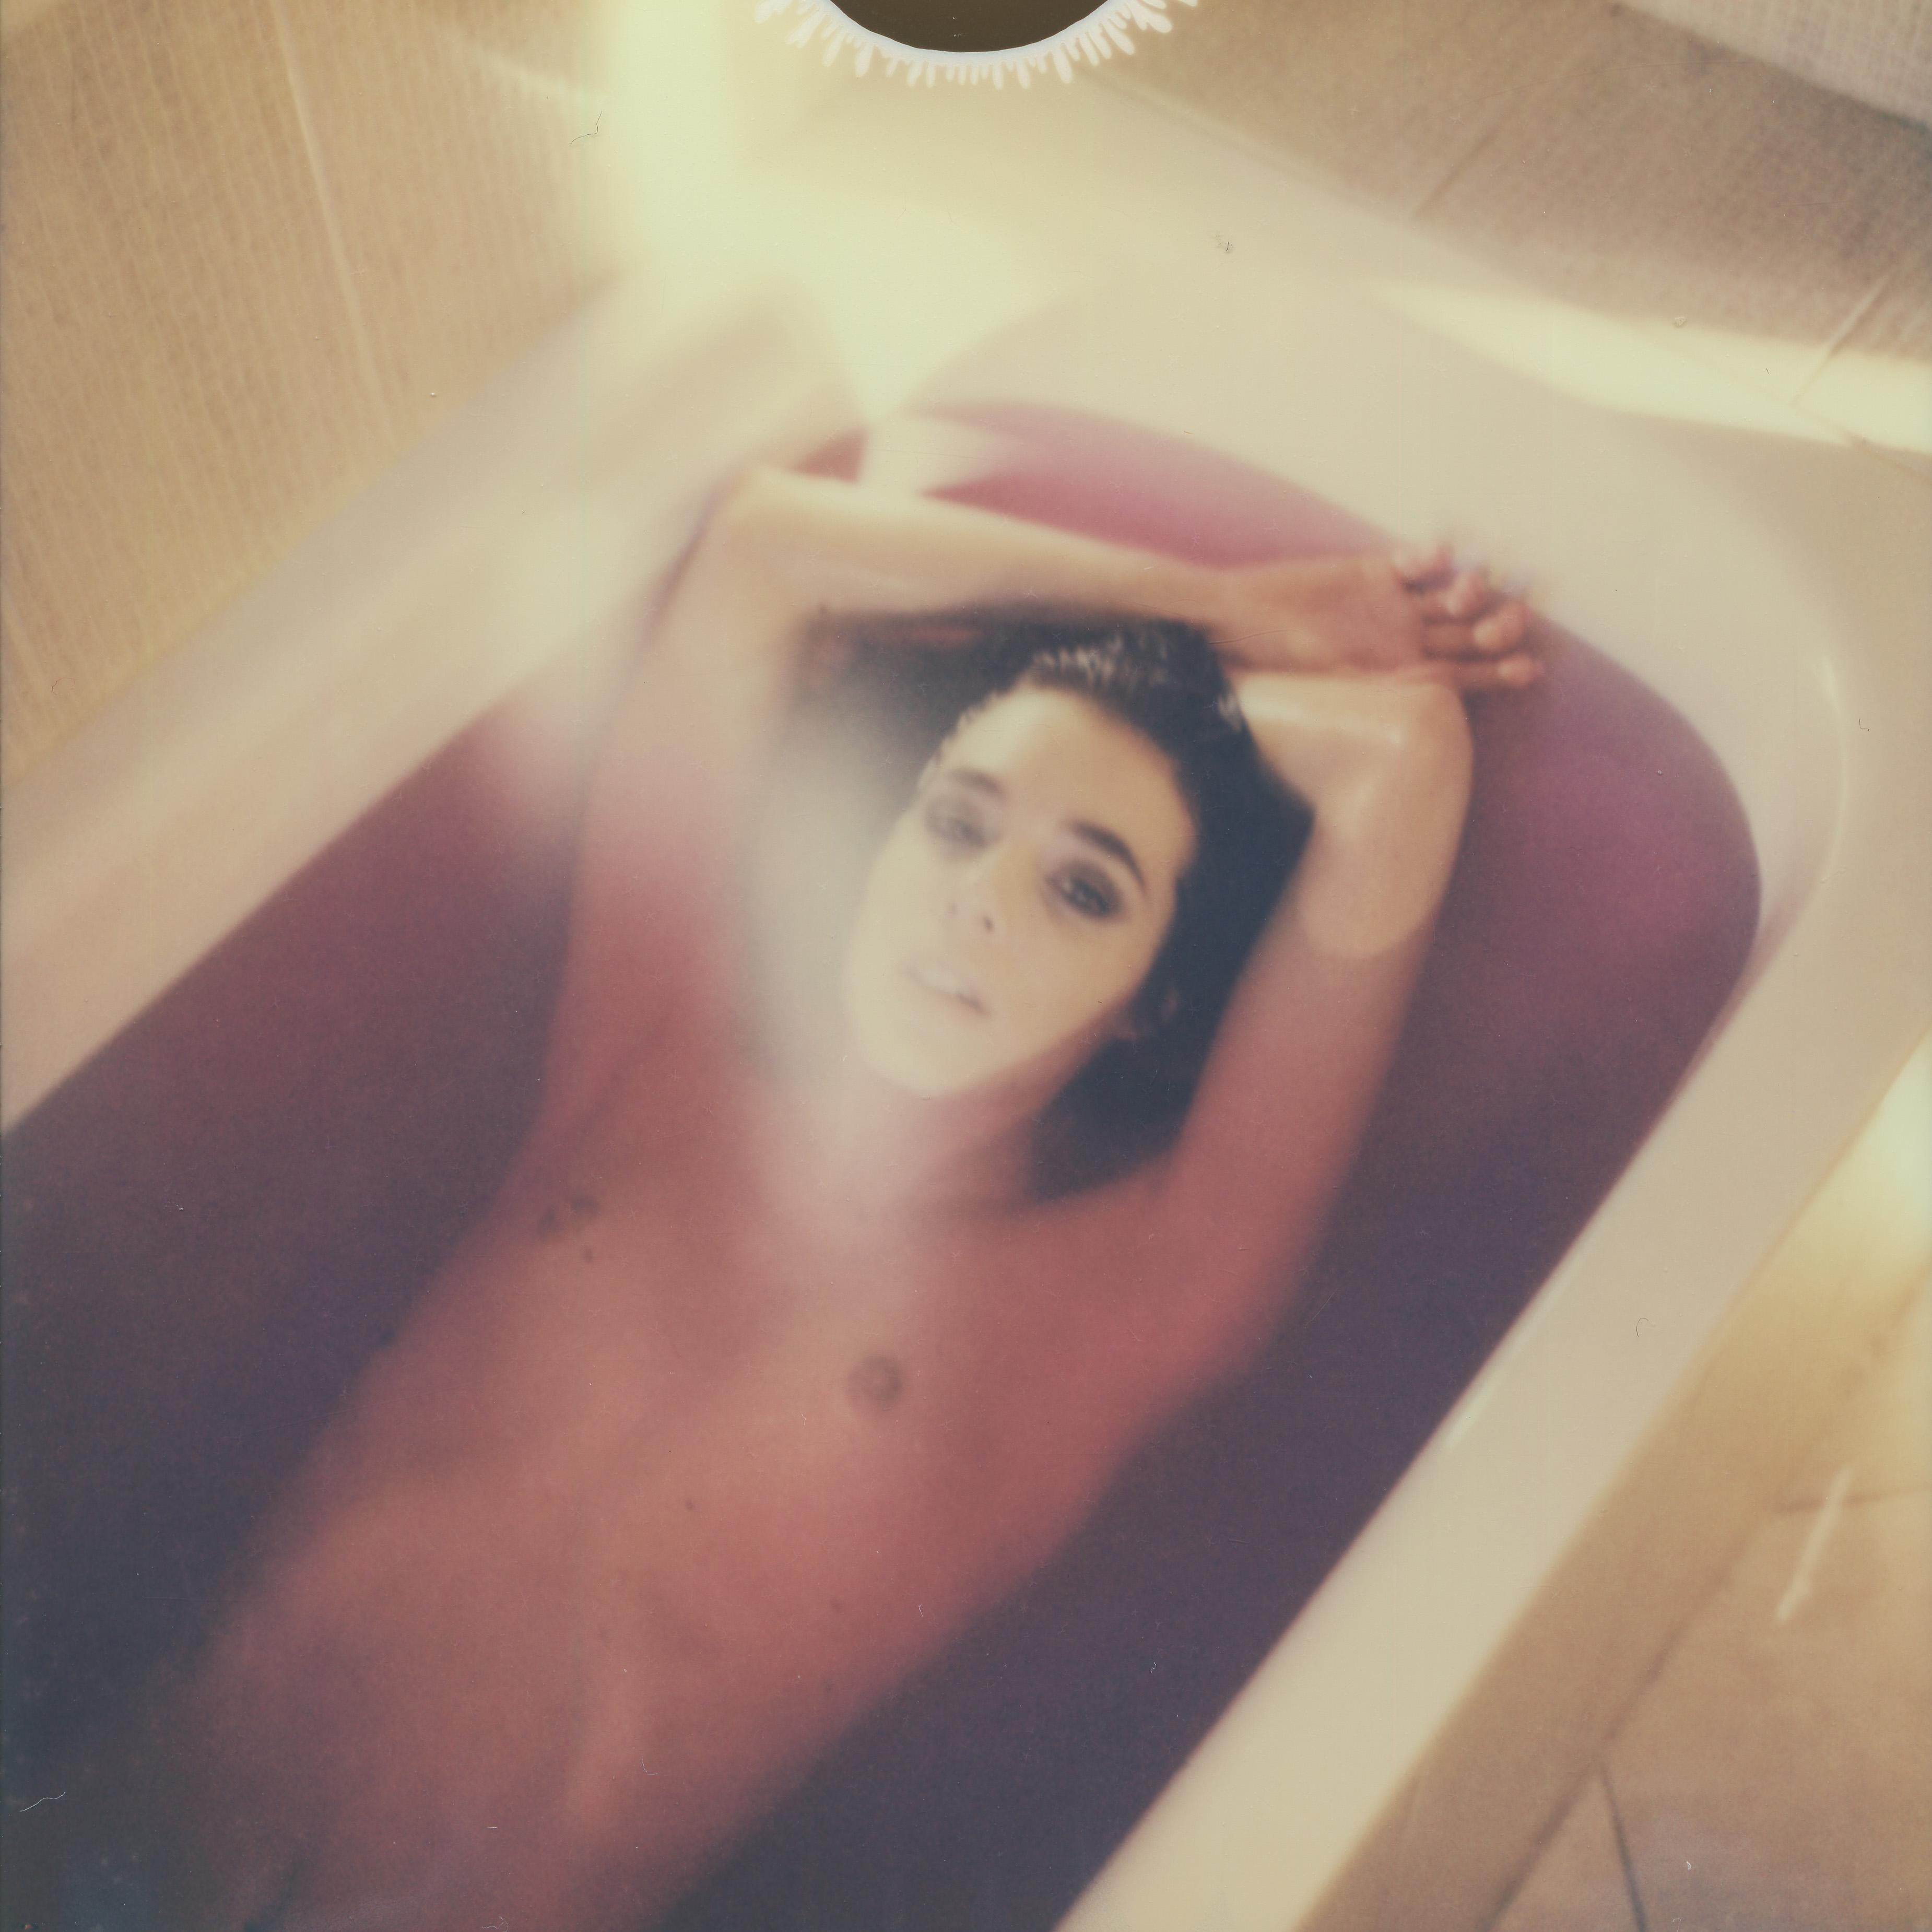 Kirsten Thys van den Audenaerde Nude Photograph - Bath time story V - Contemporary, Nude, Women, Polaroid, 21st Century